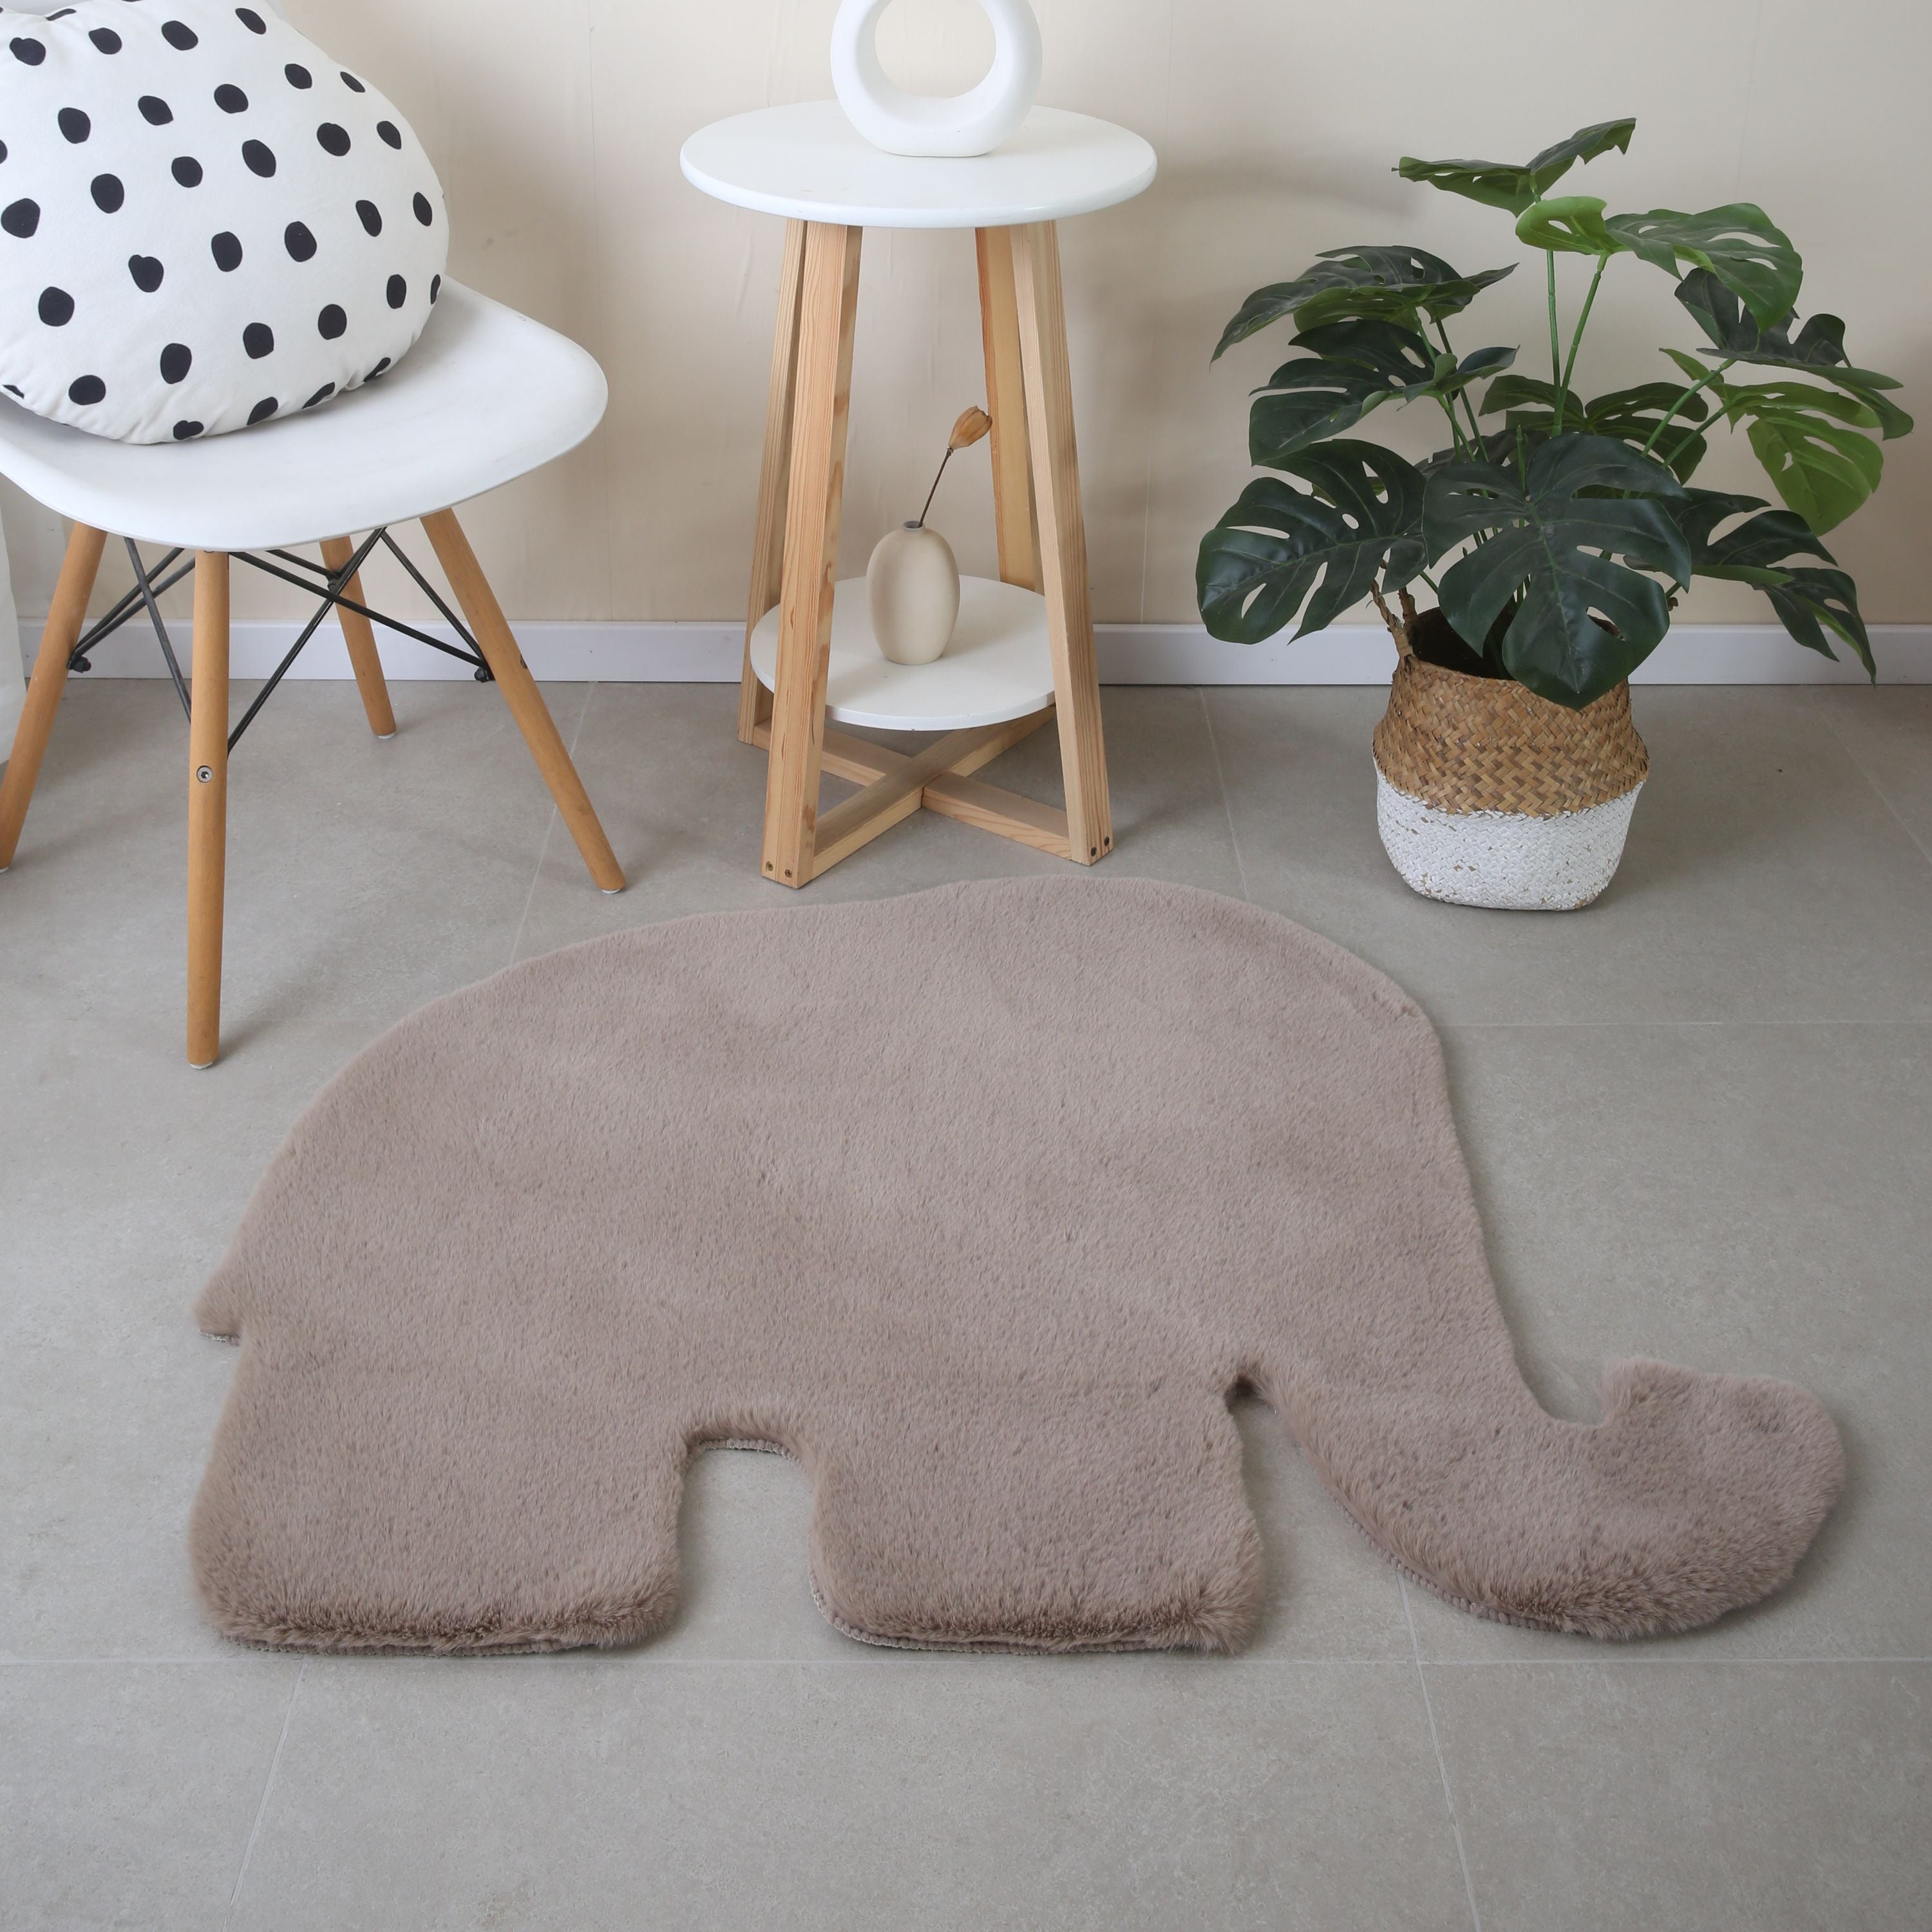 Teppich Plüsch Einfarbig Elefantenform Kunstfell Kinderzimmer Super Felloptik